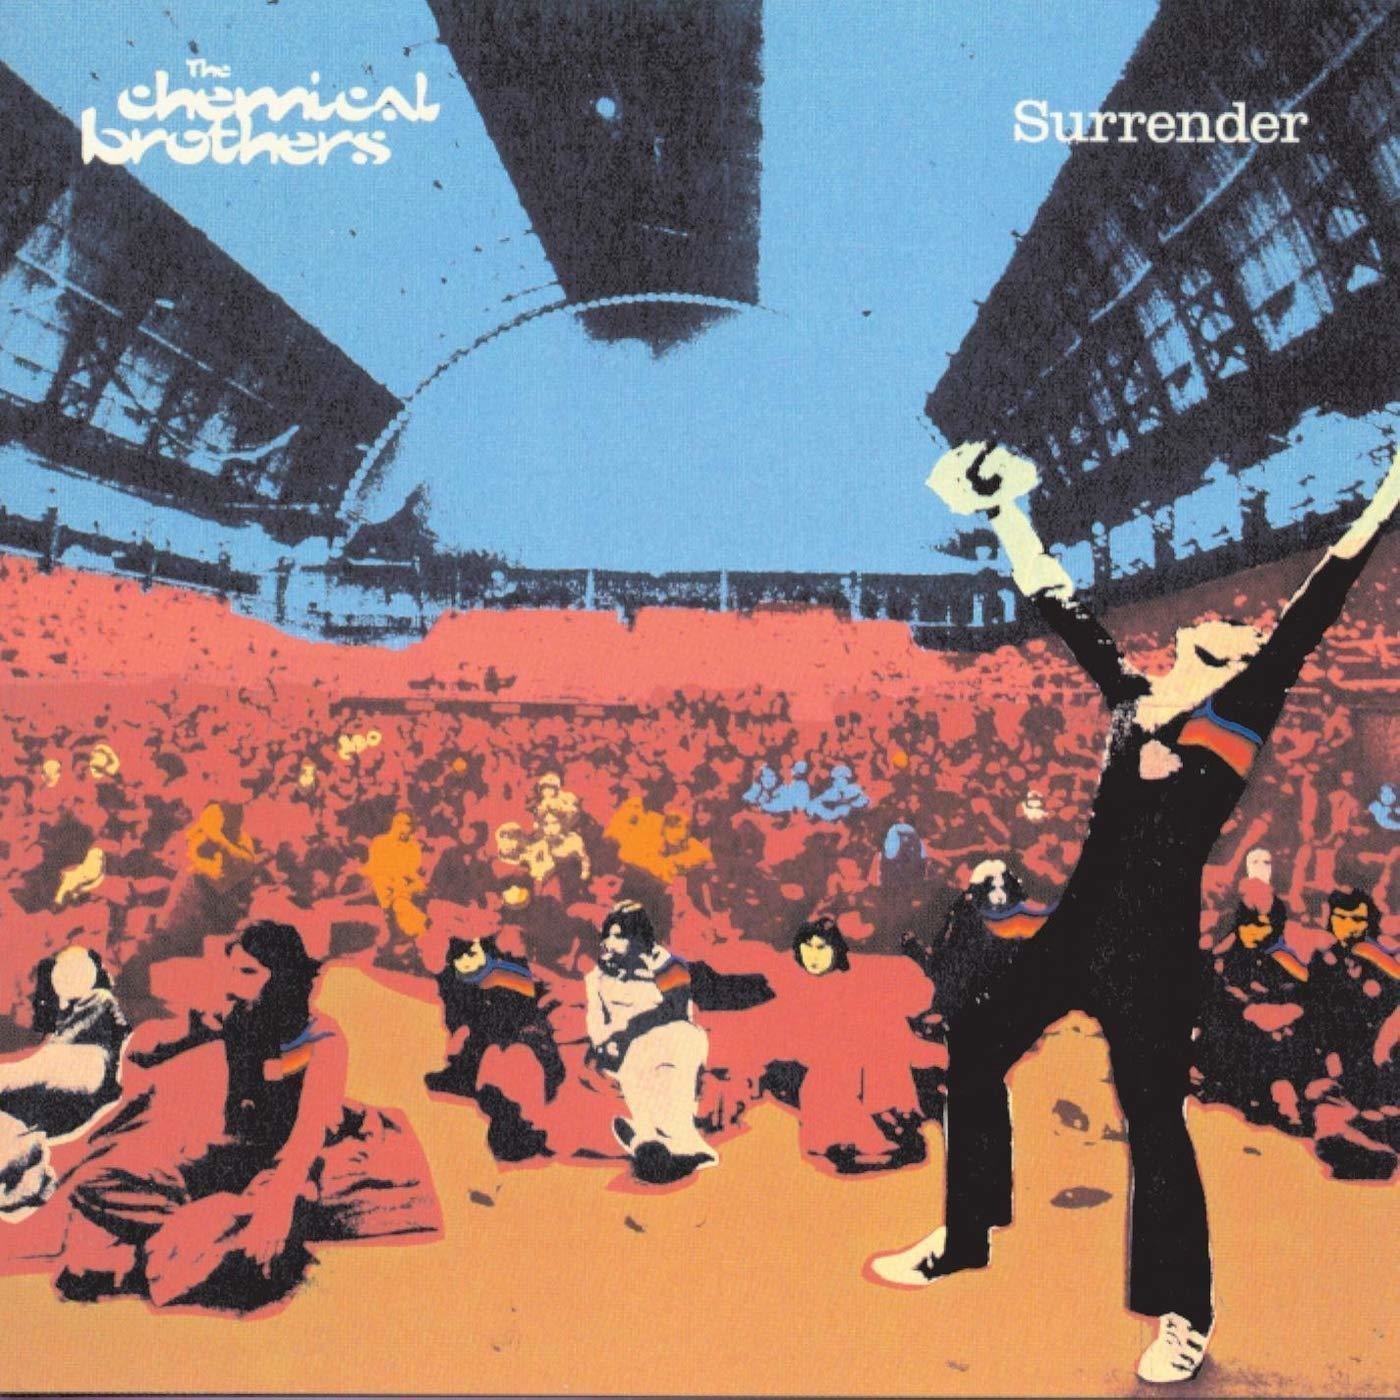 Schallplatte The Chemical Brothers - Surrender (4 LP + DVD)